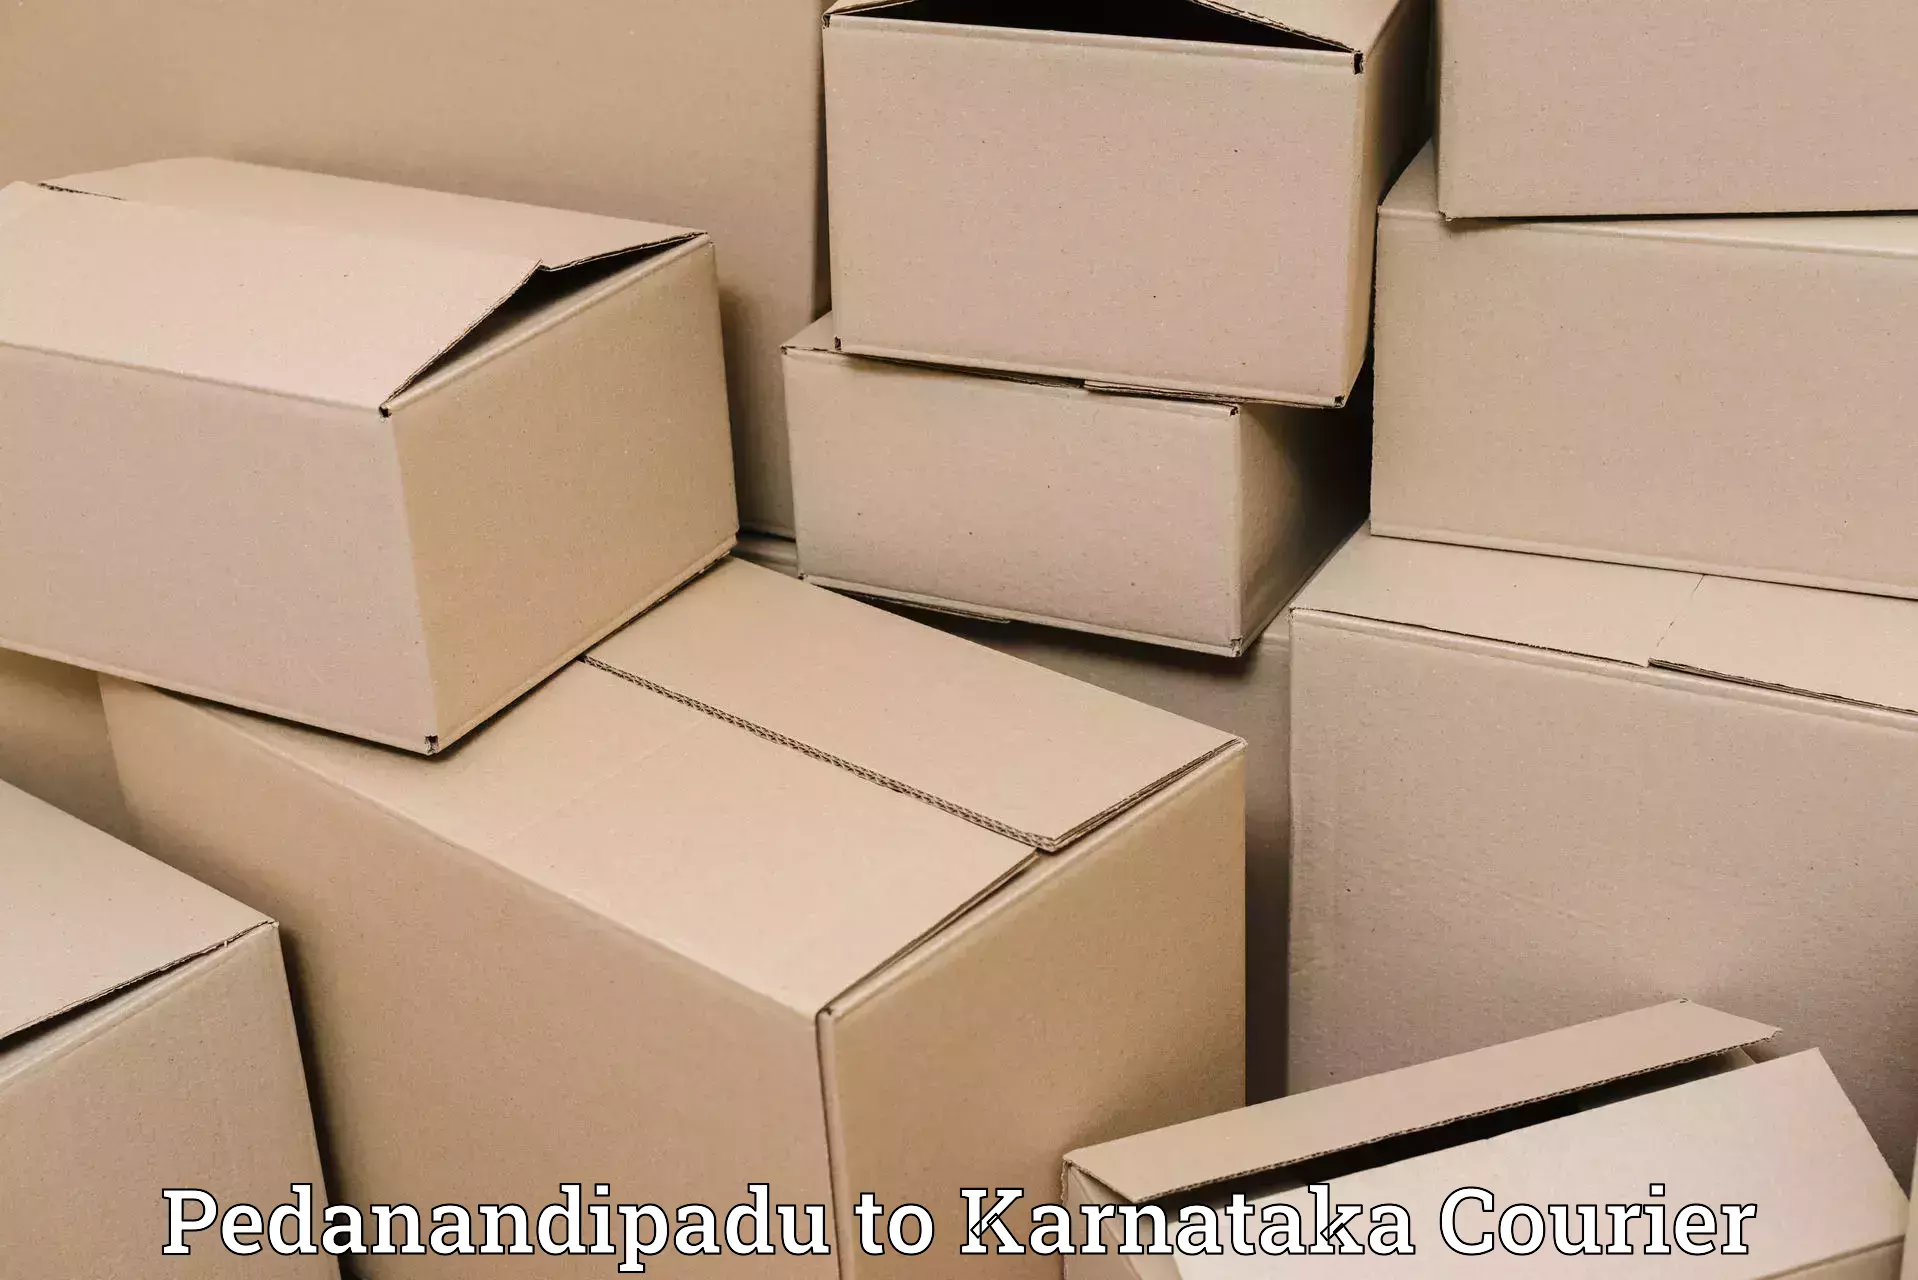 Streamlined logistics management Pedanandipadu to Karnataka